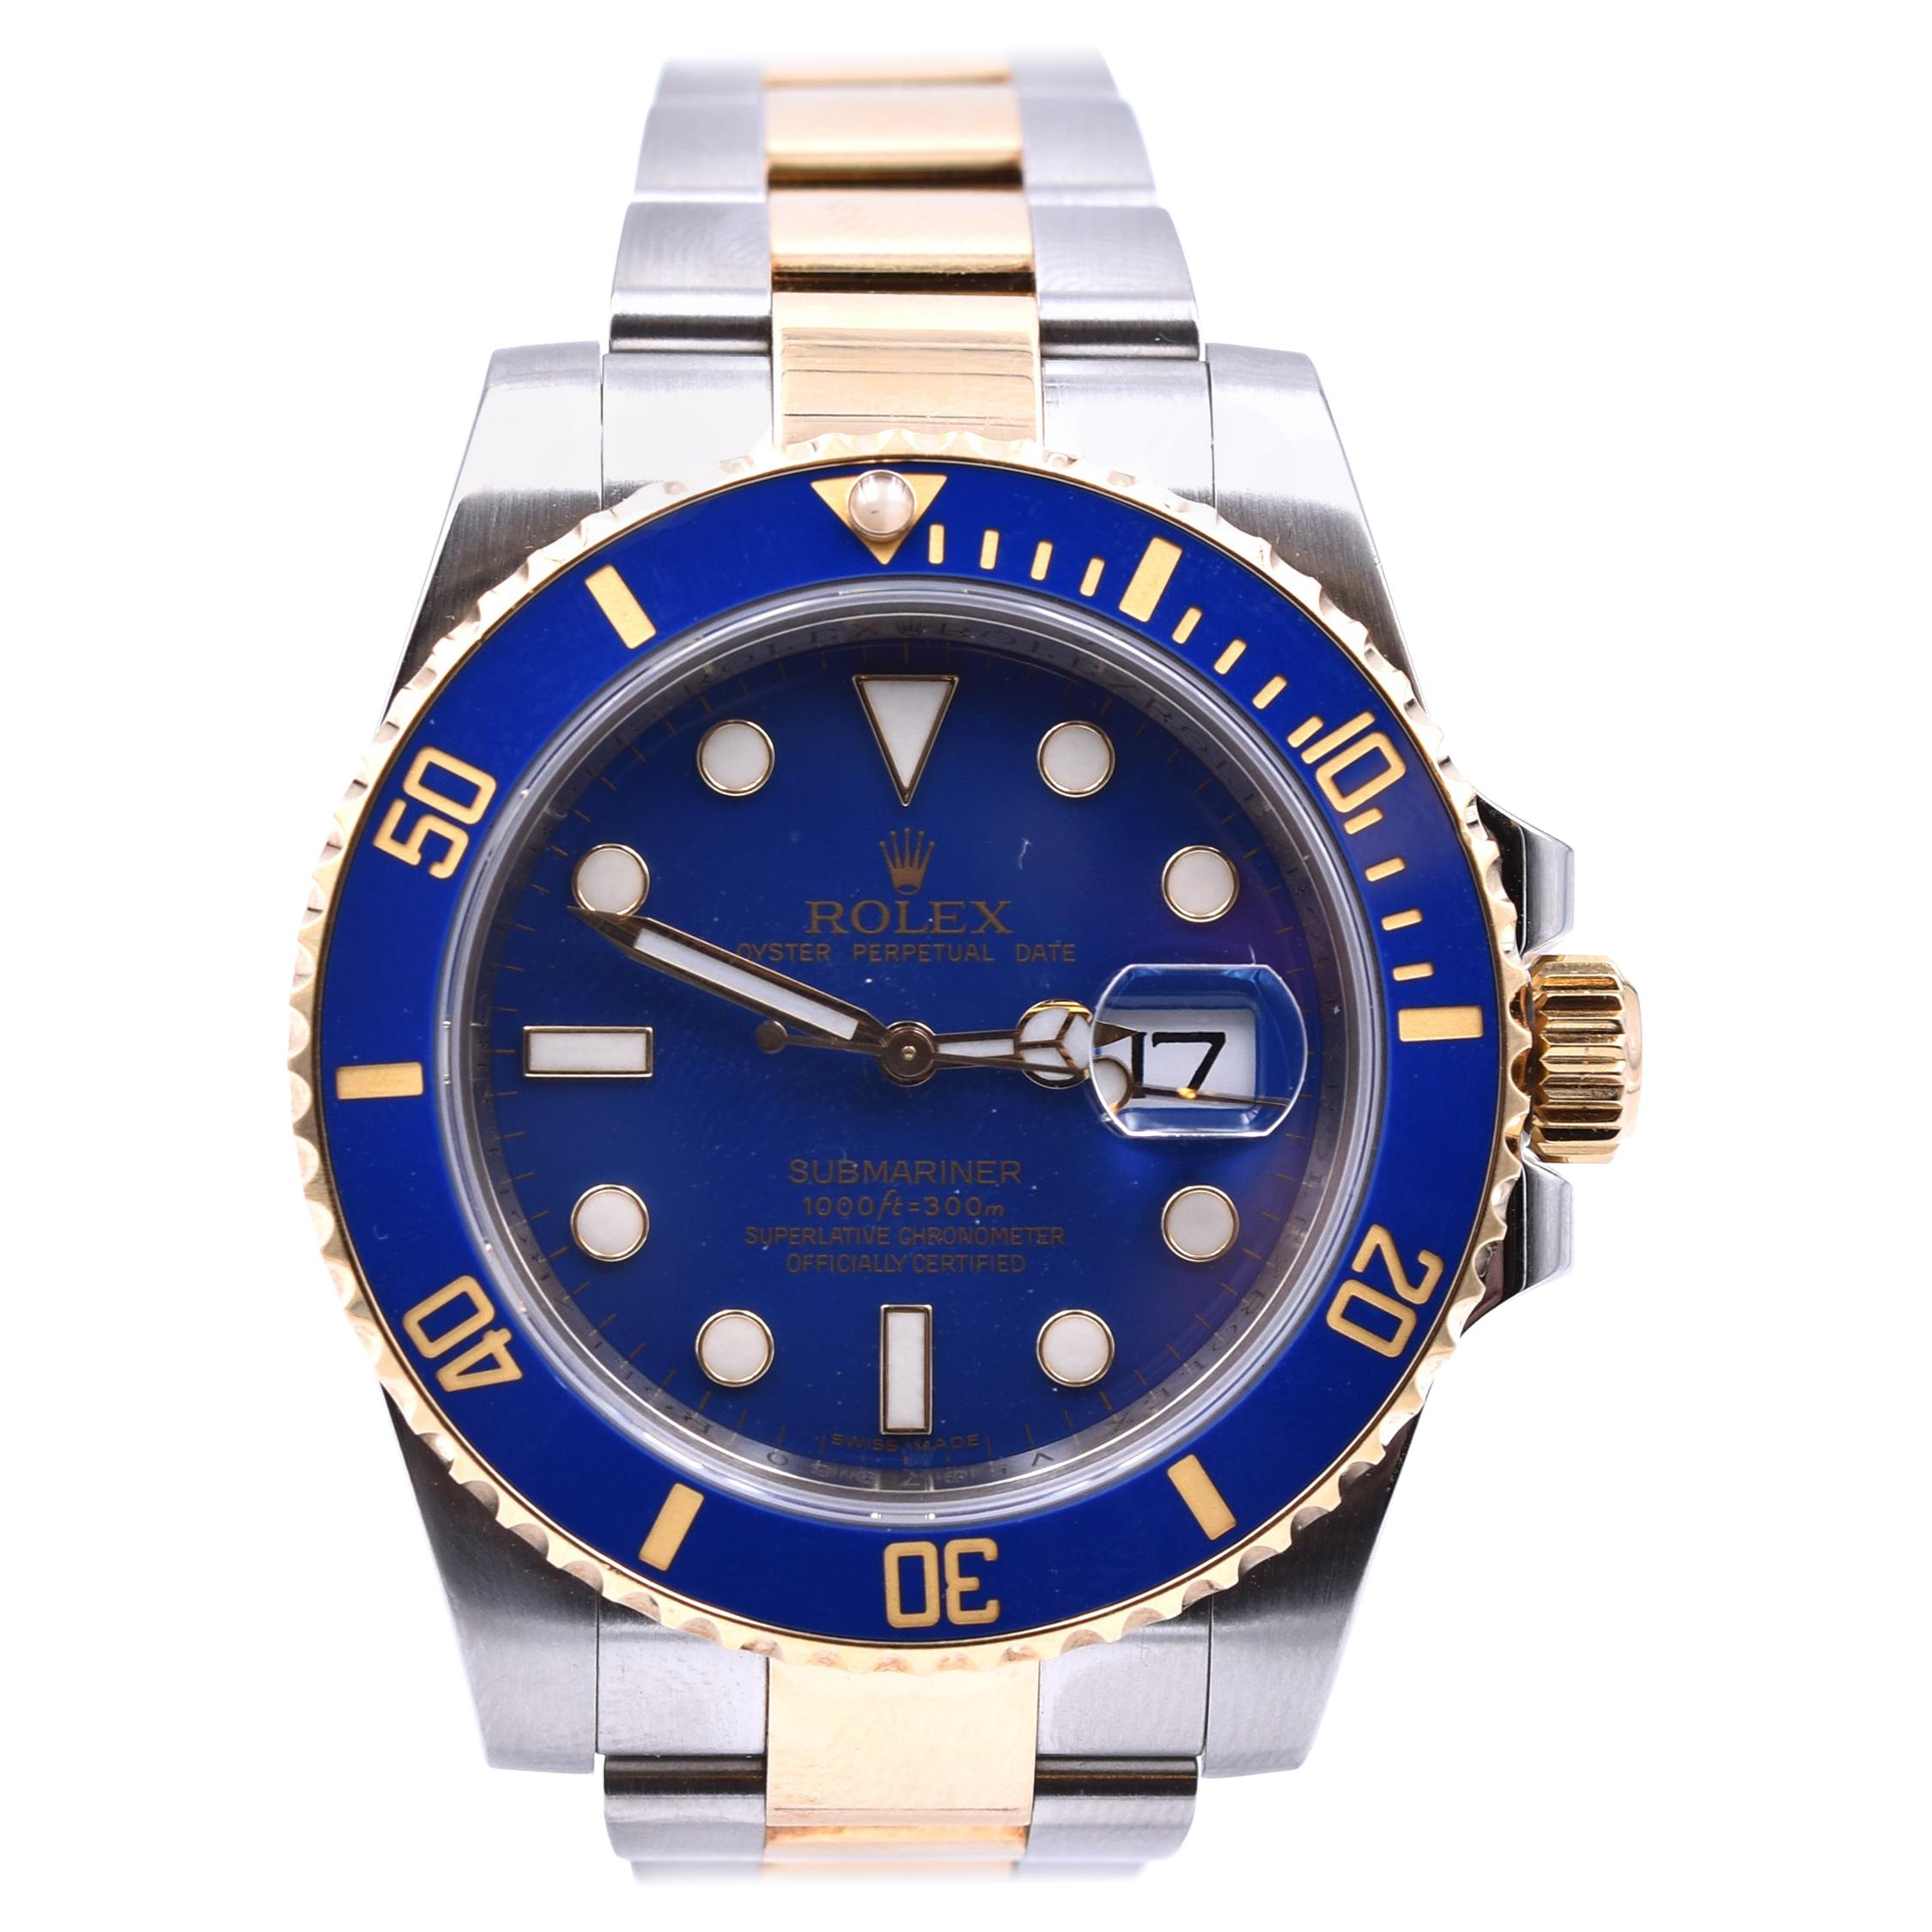 Rolex Submariner Blue Ceramic Submariner Two-Tone 18k Gold Watch Ref 116613LB